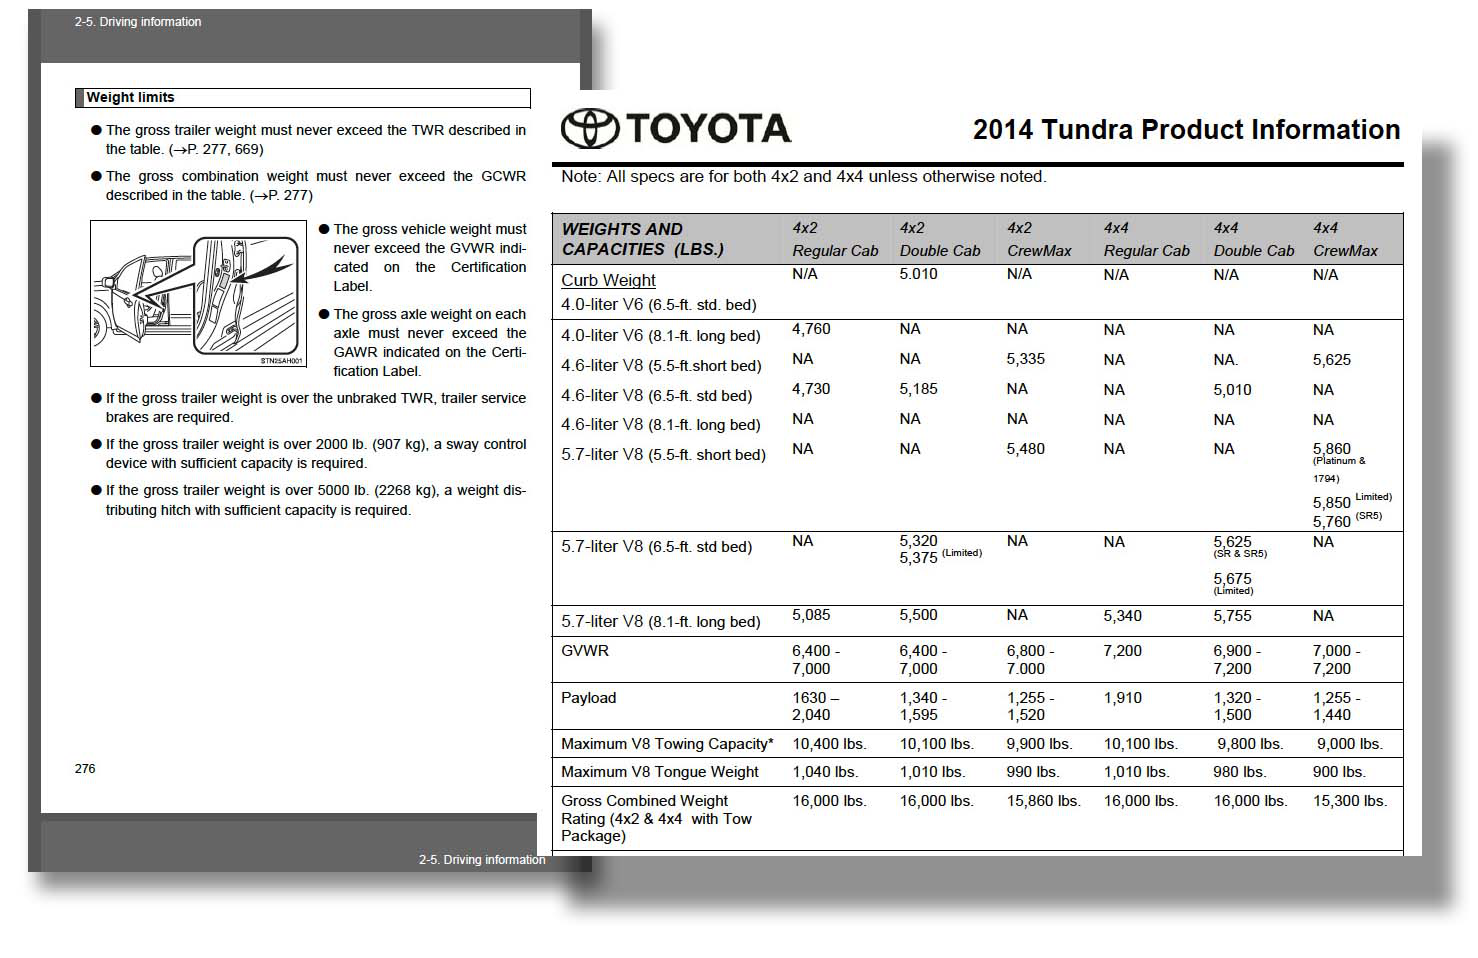 ROAD TEST: 2014 Toyota Tundra Crew Max Platinum | Medium Duty Work